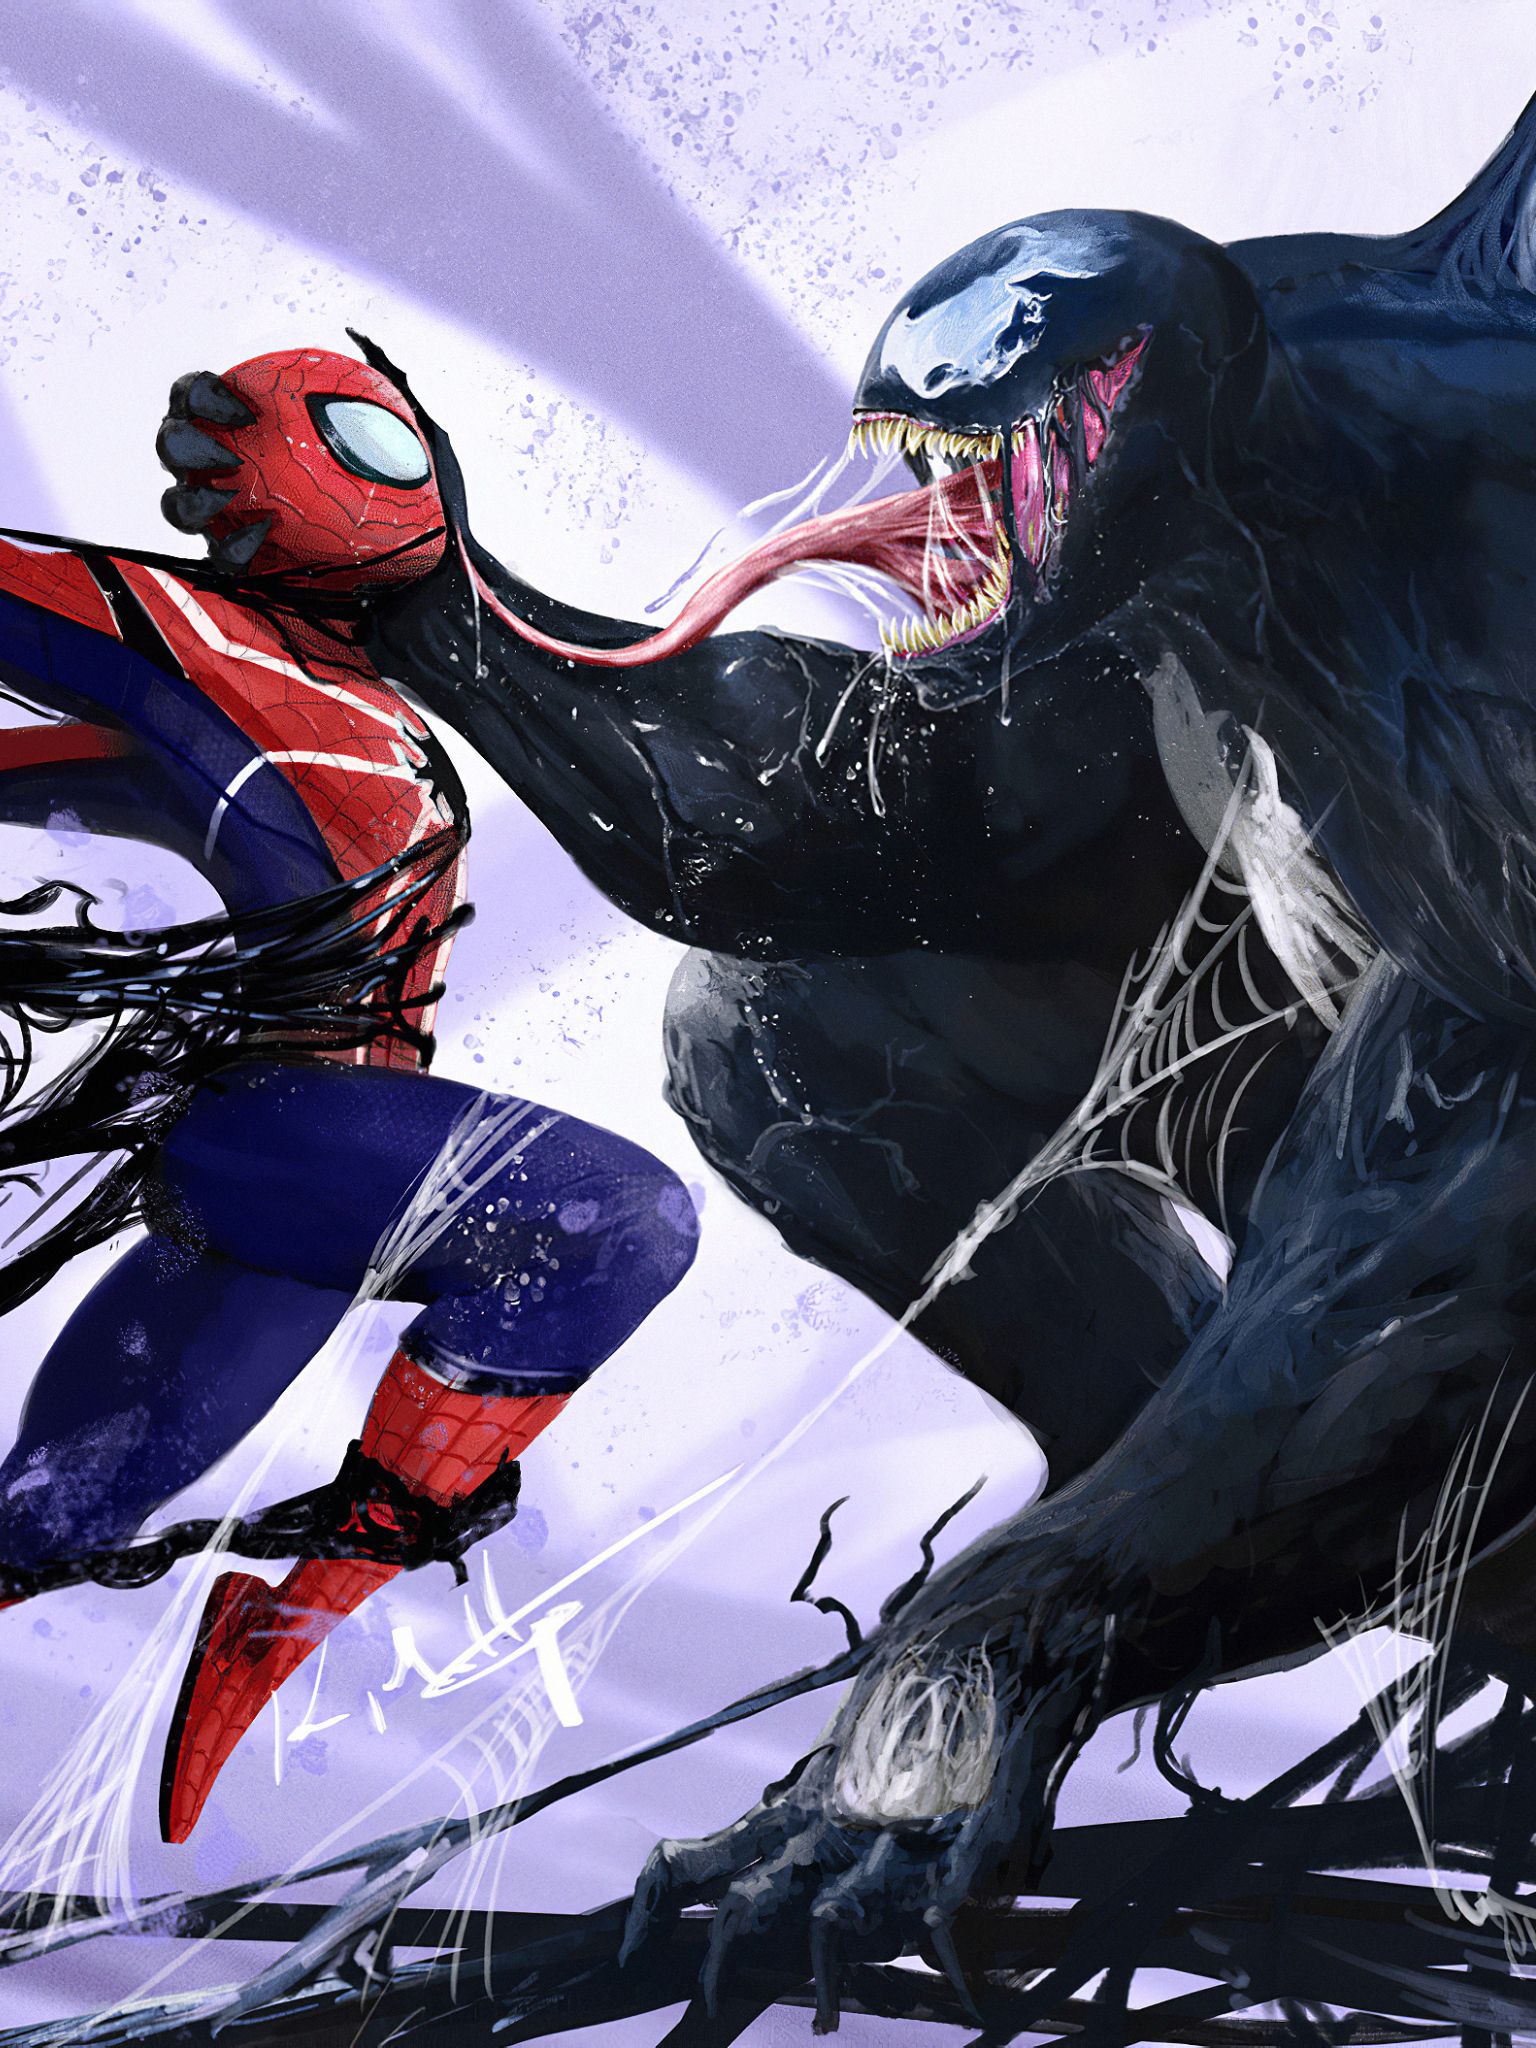 Venom Vs Spider Man Art 1536x2048 Resolution Wallpaper, HD Artist 4K Wallpaper, Image, Photo and Background